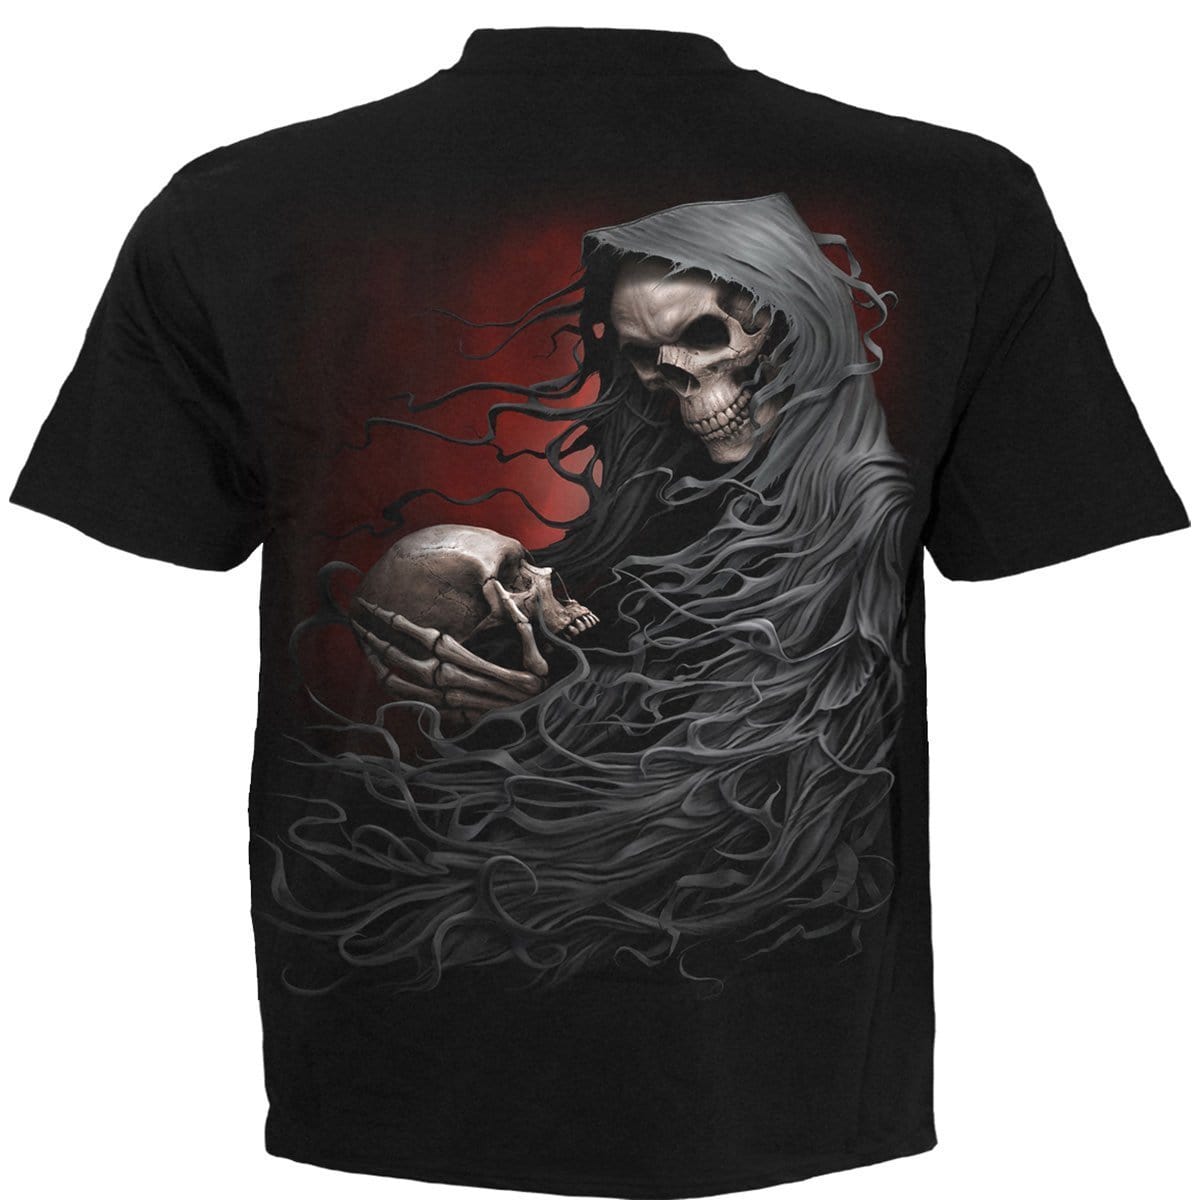 DEATH ROBE - T-Shirt Black - Spiral USA